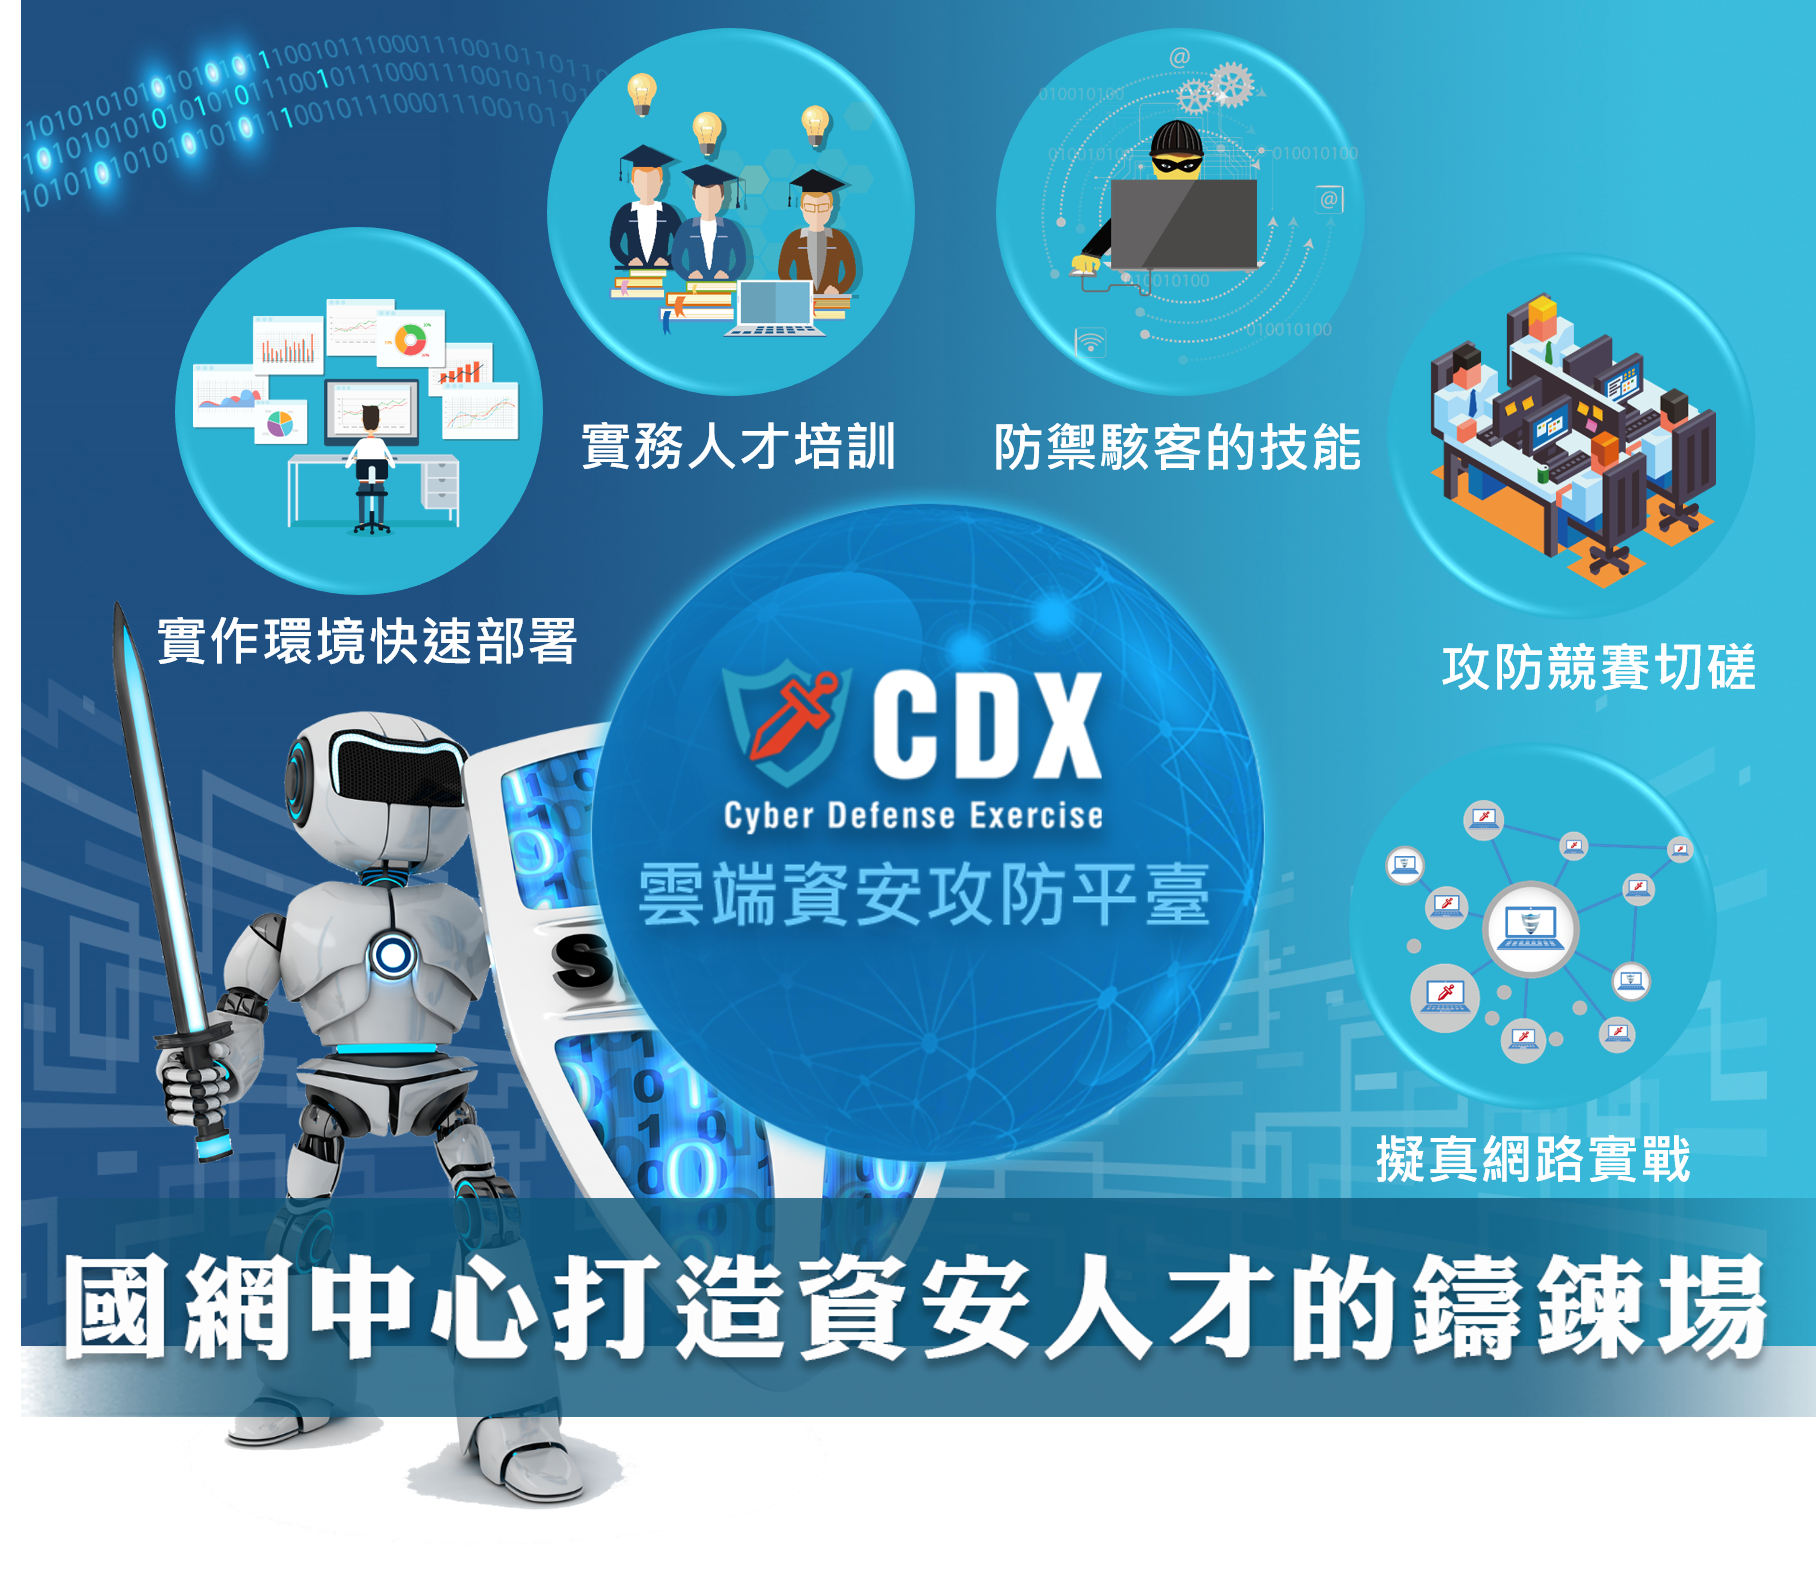 CDX雲端資安攻防平臺：提供實作環境快速部署、實務人才培訓、防禦駭客的技能、攻防競賽切磋、擬真網路實戰，打造資安人才